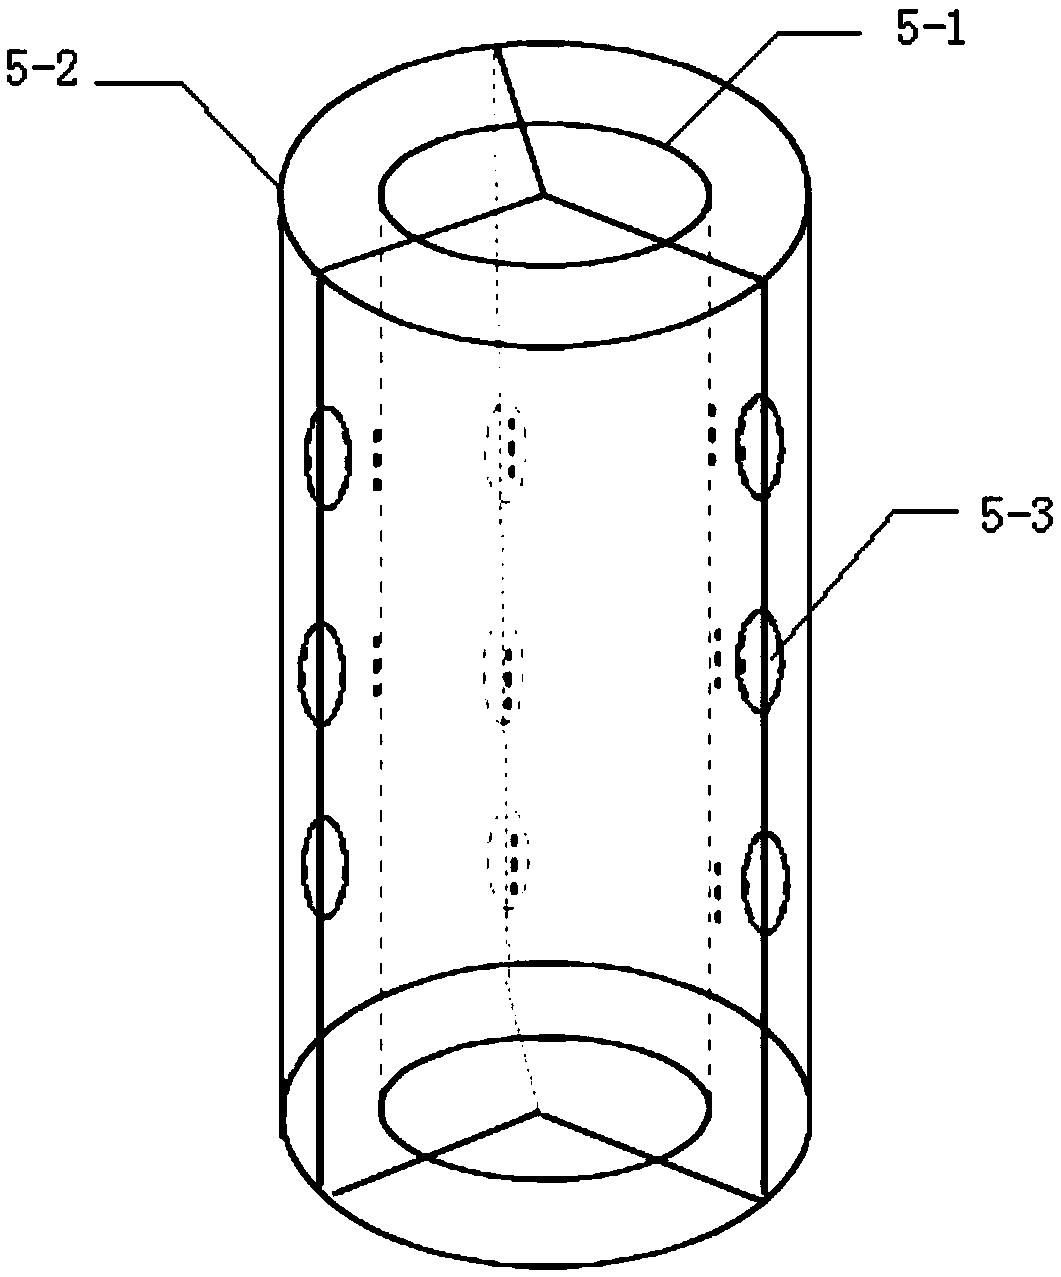 A CG ultrasonic reverberation resonance field domestic sewage sludge processor and its method and application for treating domestic sewage sludge